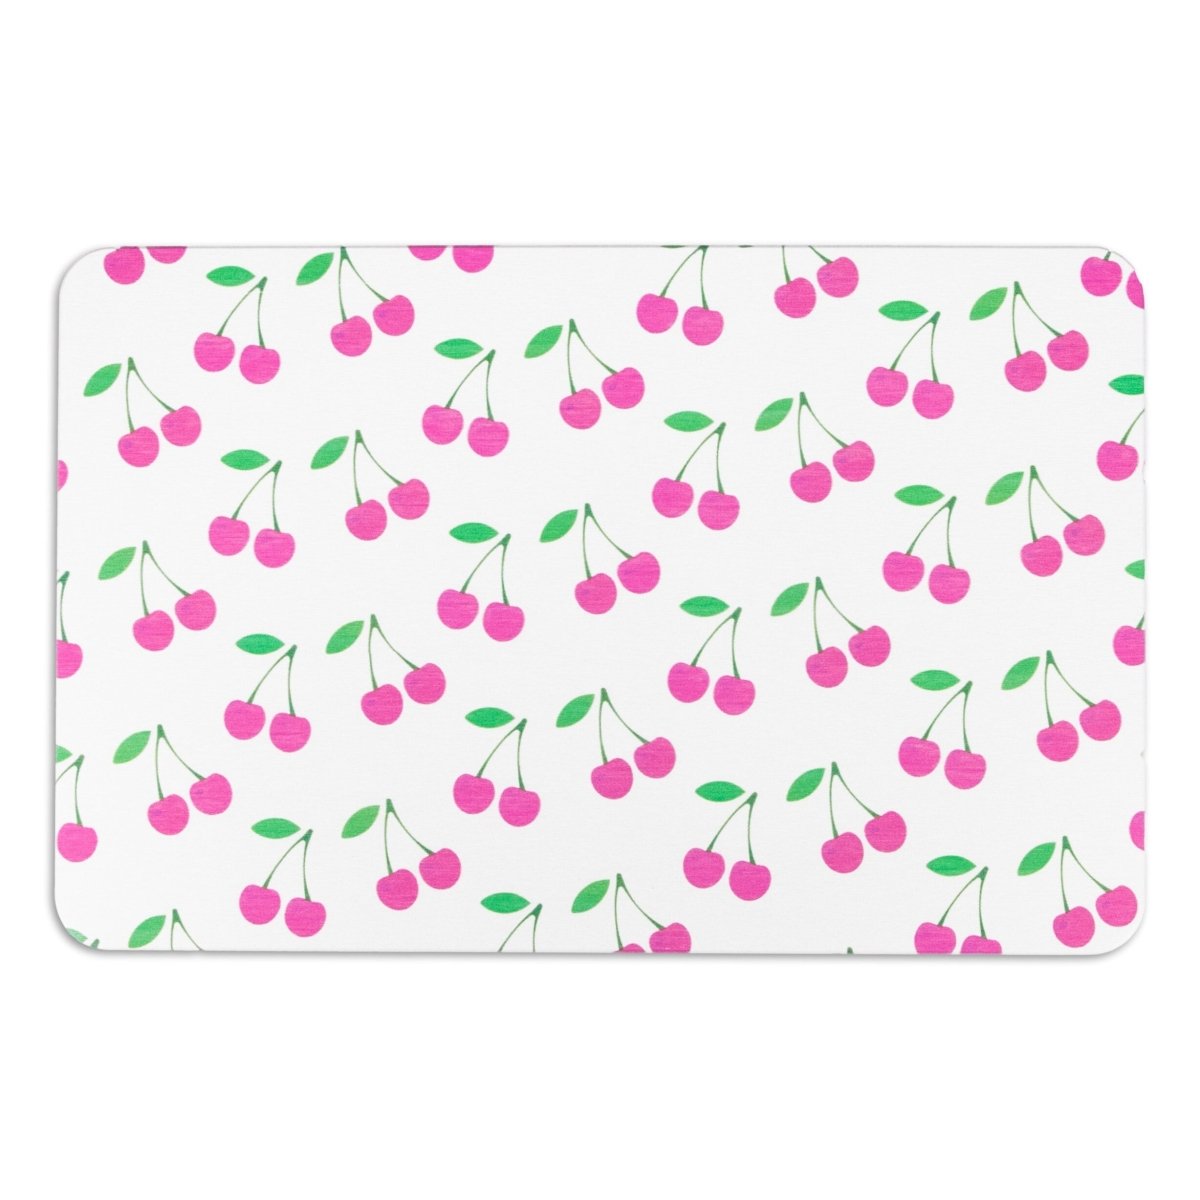 Pink Cherries Bathmat - Cherry Blossom Bath Mat - Cute Bath Mat - Cherries Gift Bathroom Decor - Cherry Lover Gift - Stone Non Slip Bath Mat - Slips Away - 1344556347 -